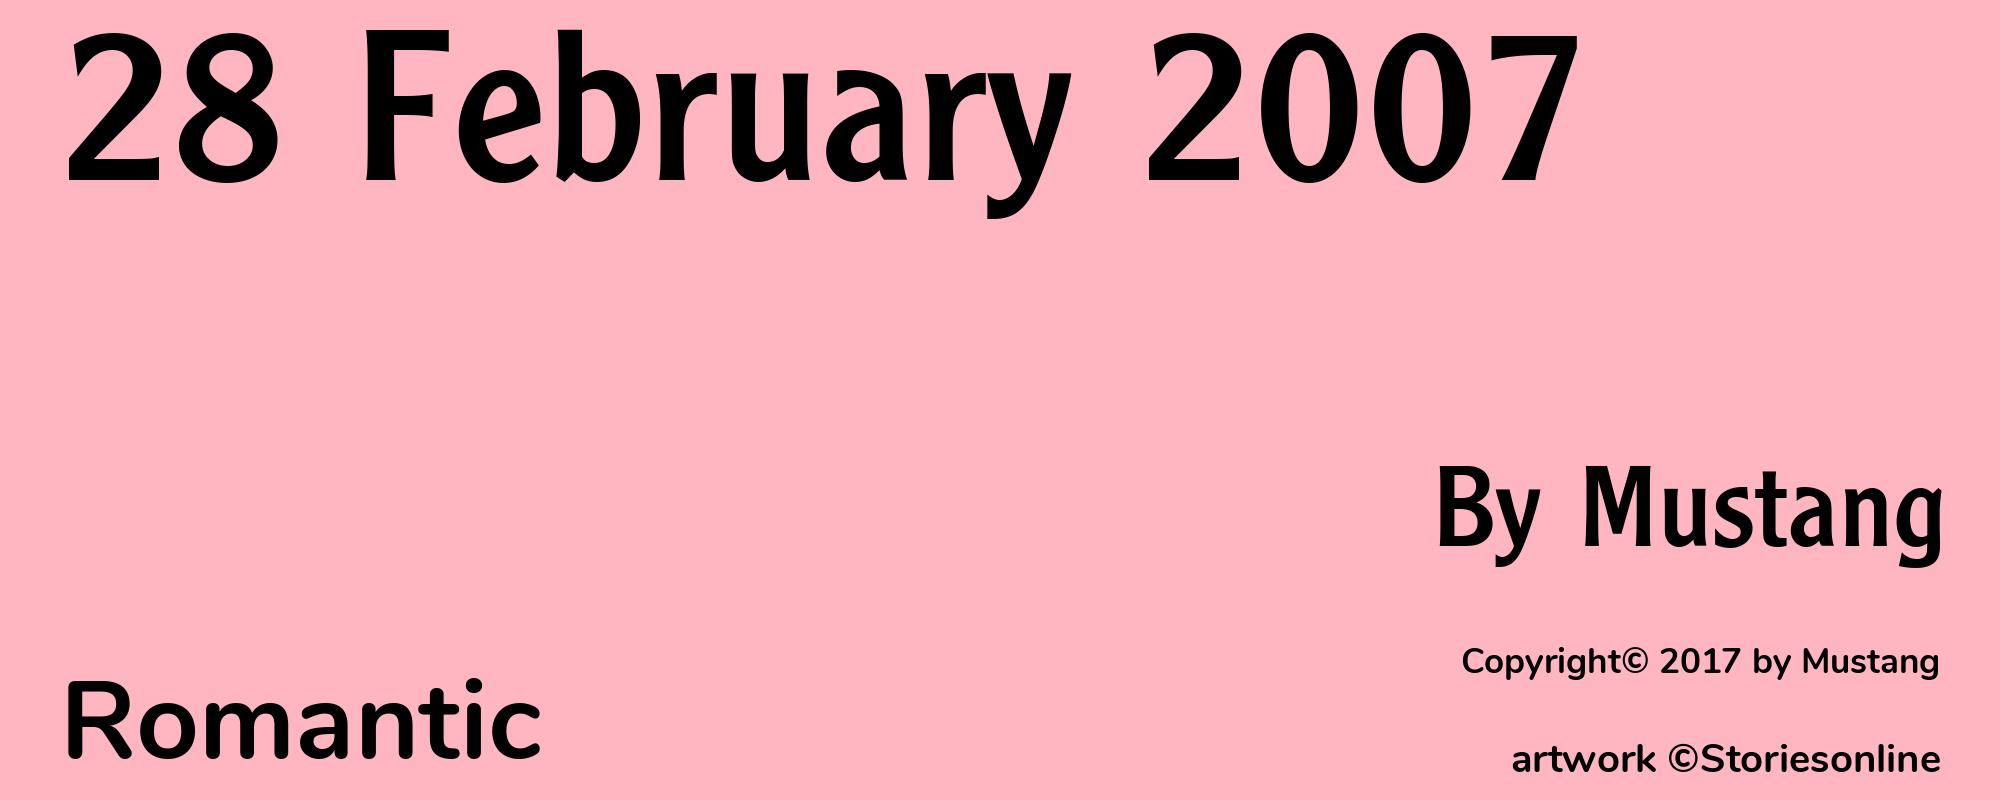 28 February 2007 - Cover